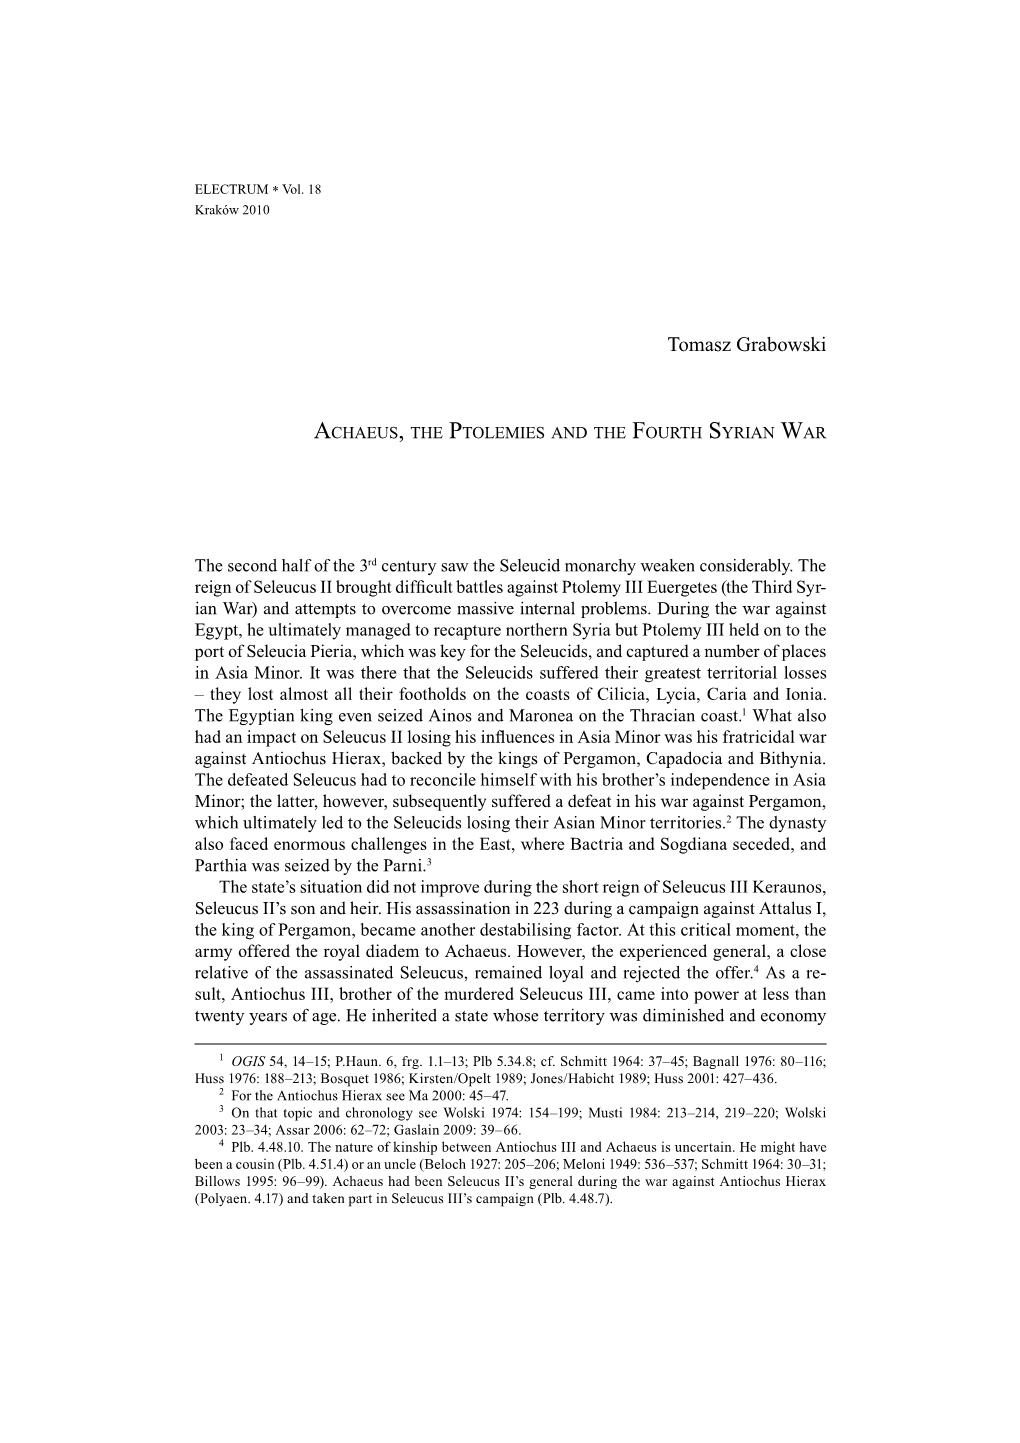 Achaeus, the Ptolemies and the Fourth Syrian War